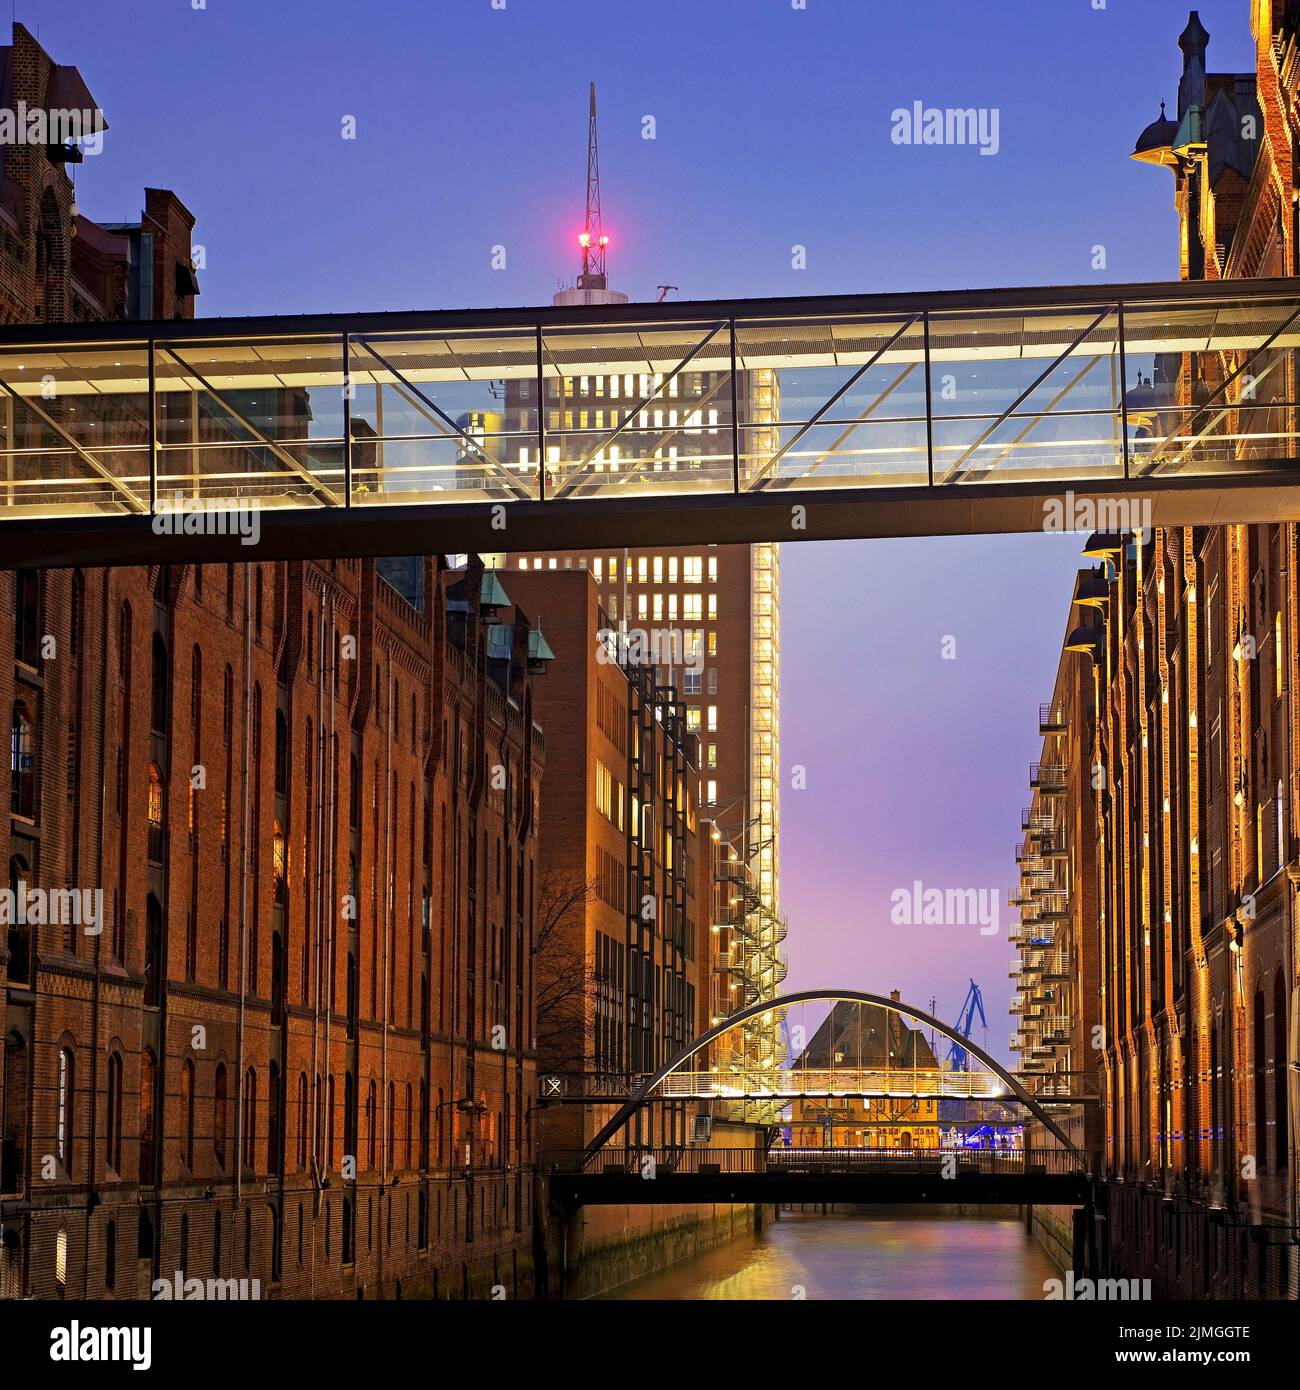 View from the Sand Bridge to Columbus Haus in the evening, Speicherstadt, Hamburg, Germany, Europe Stock Photo